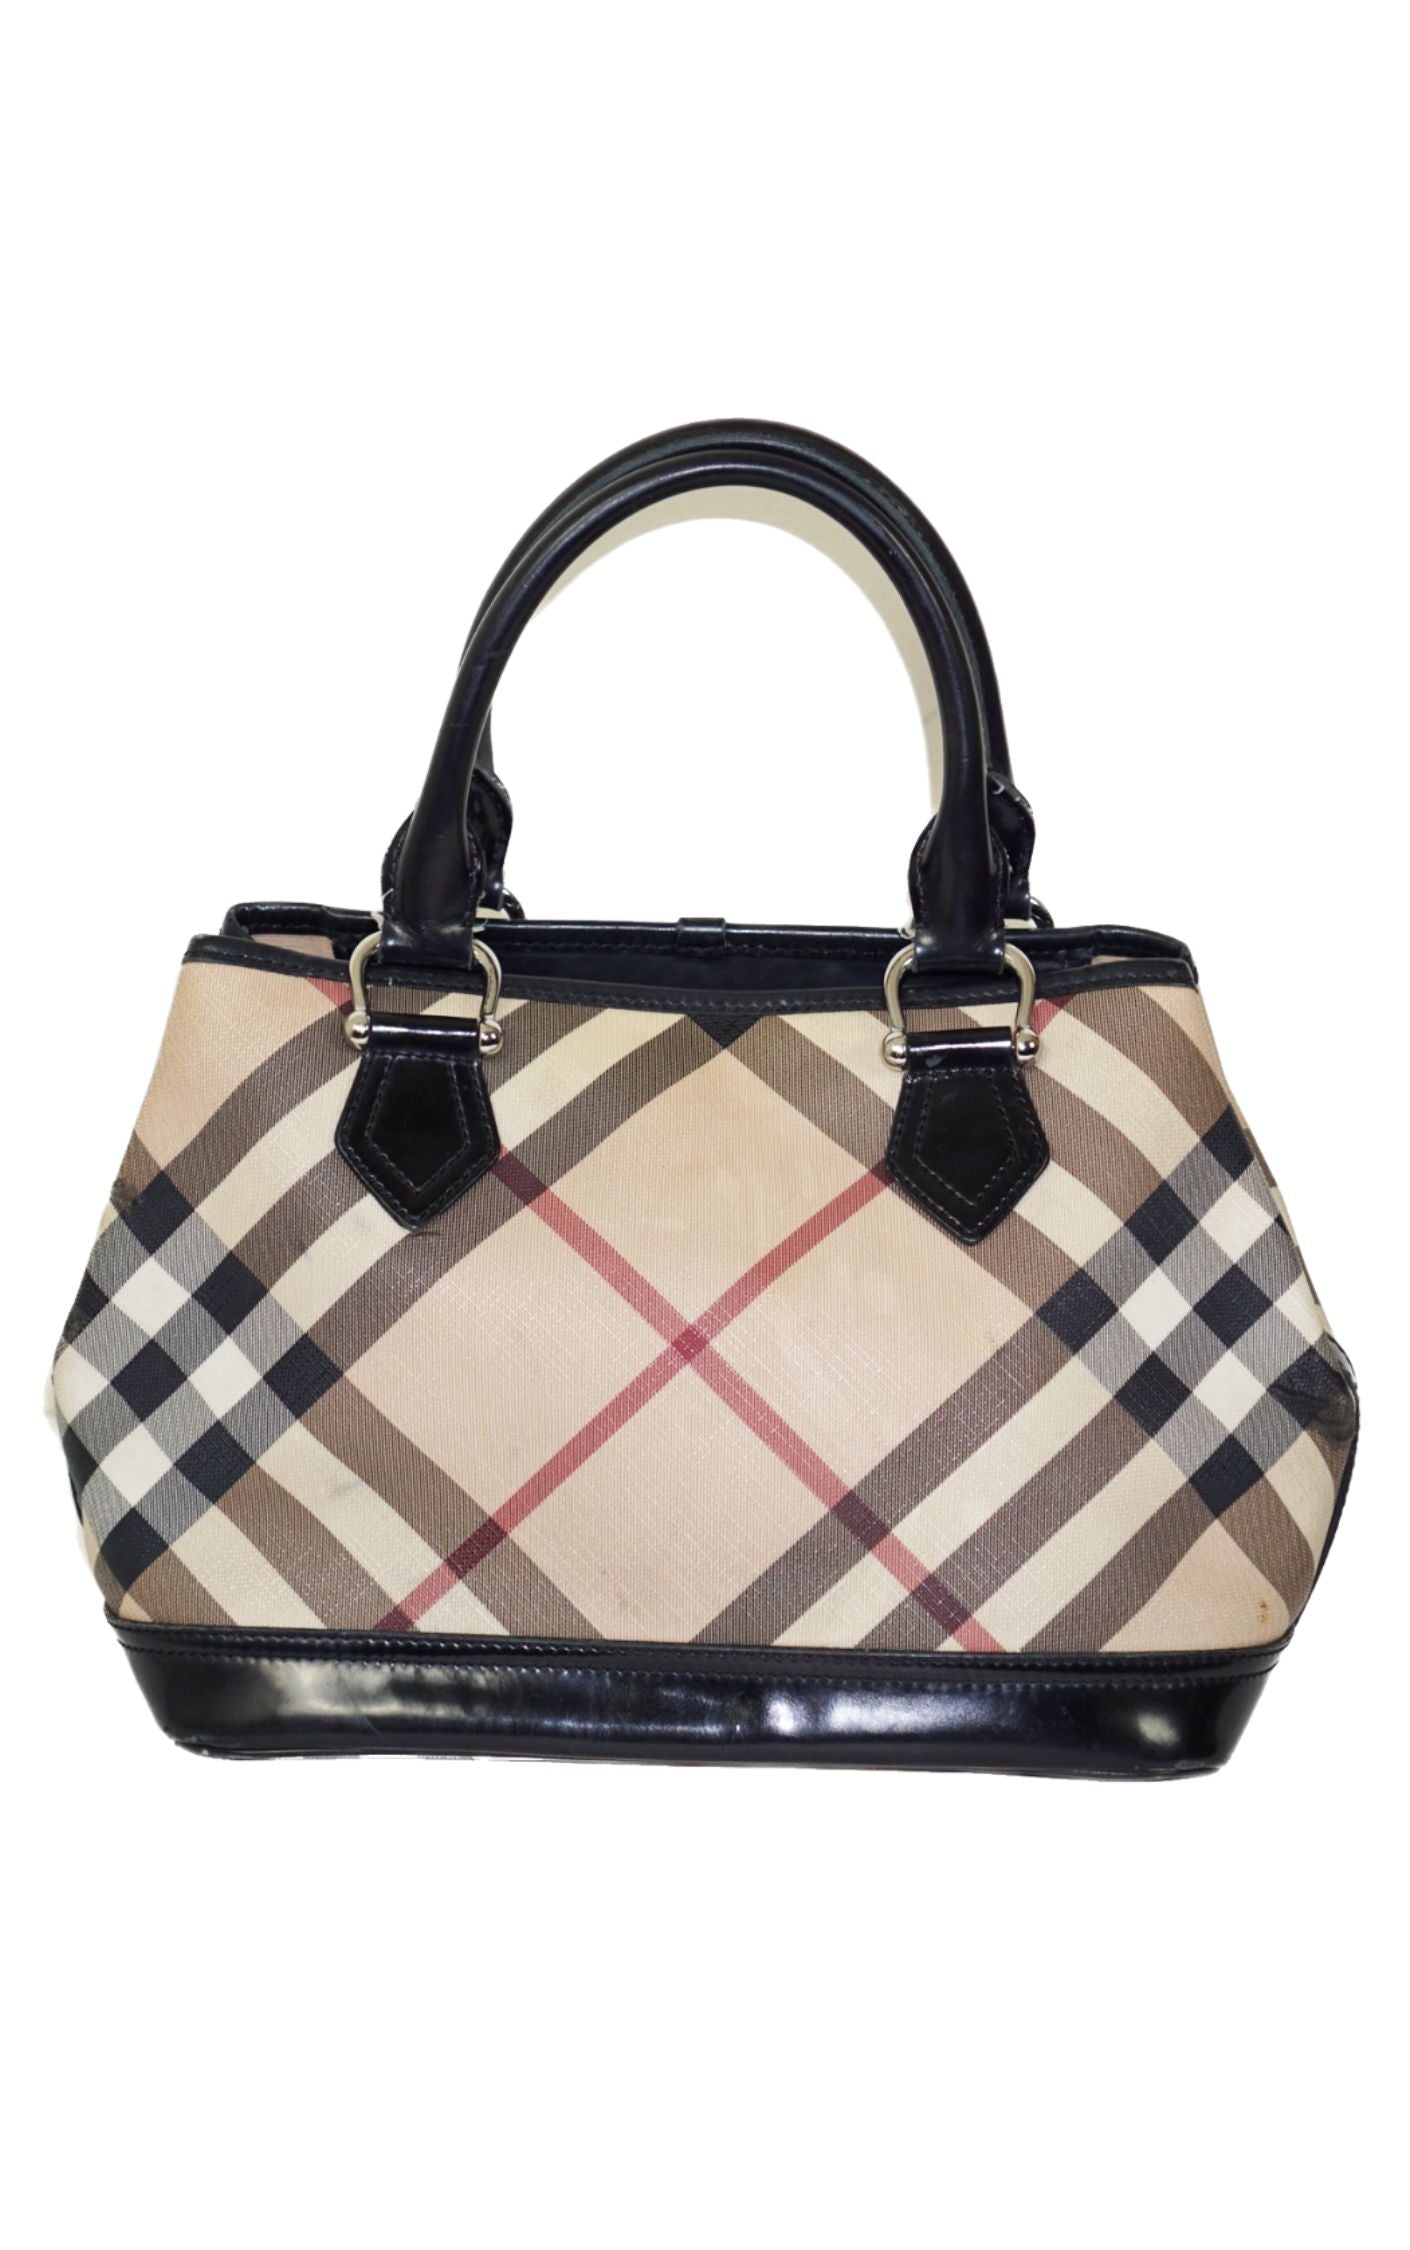 BURBERRY Prorsum Y2K Tartan Leather Handbag Purse